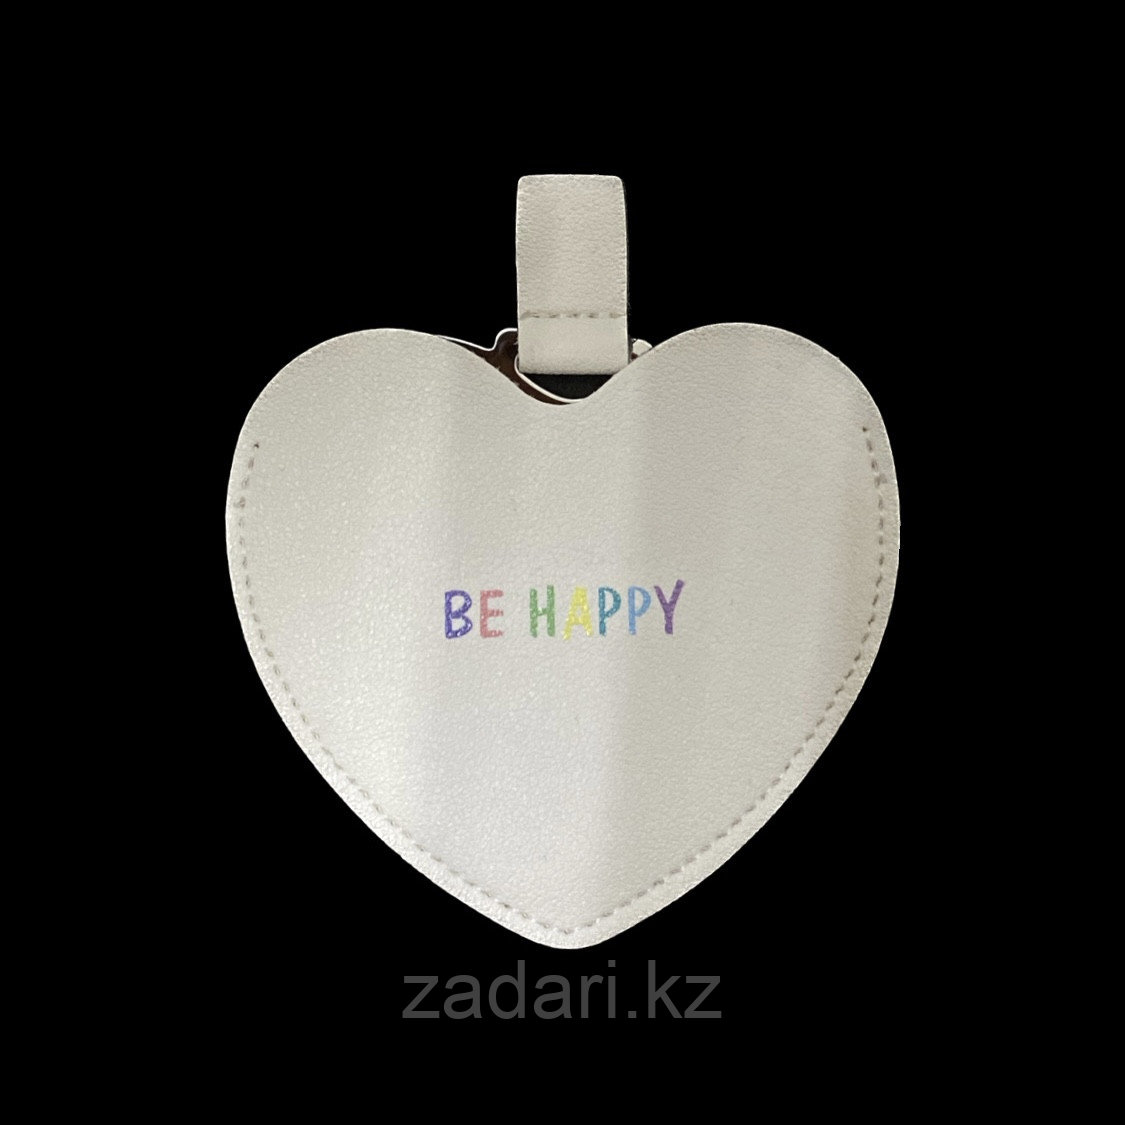 Зеркало «Be happy» сердце с чехлом, фото 1